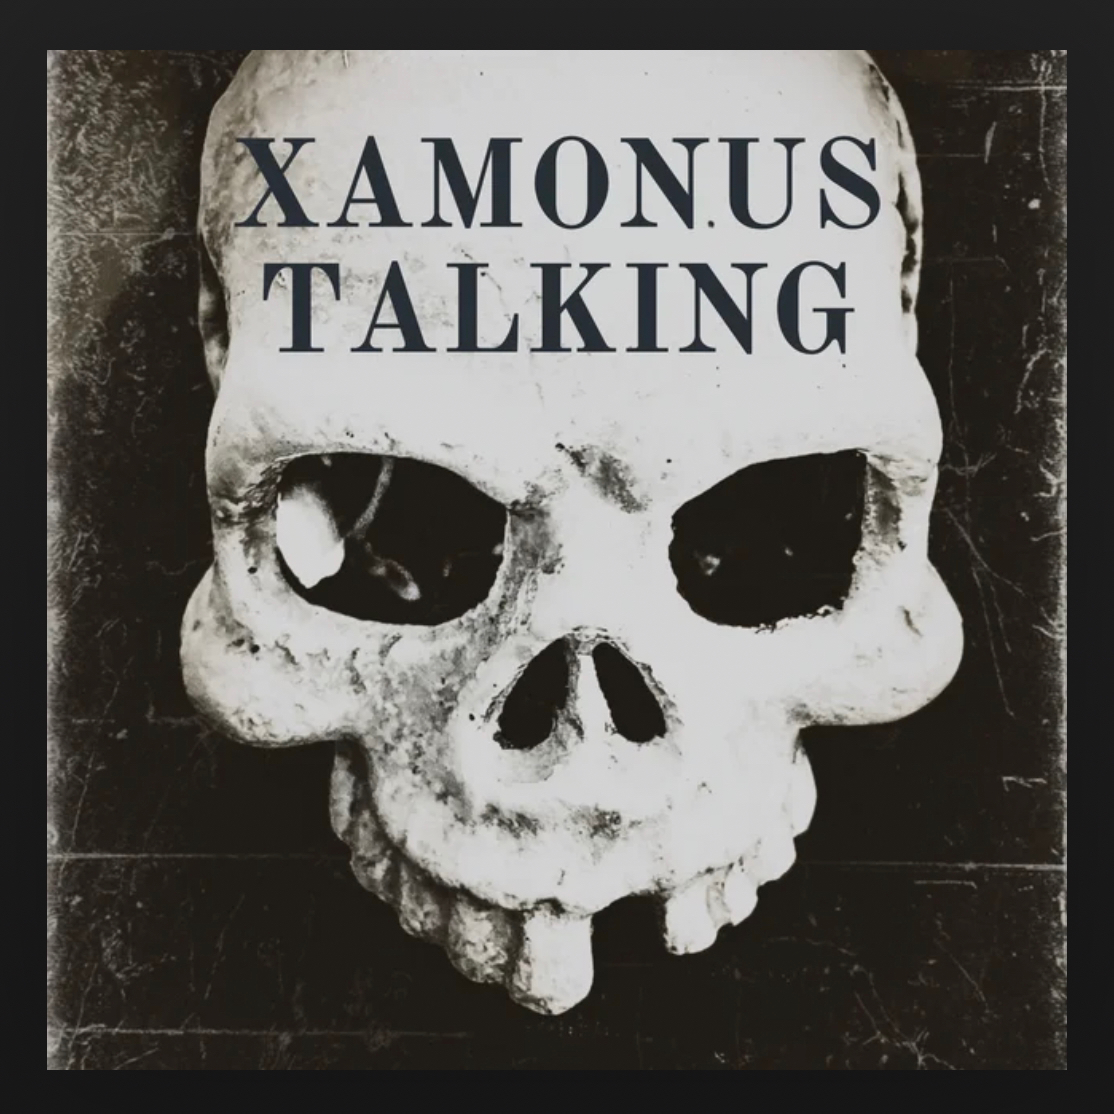 images/content/xamonus-talking-skull-squ.jpeg#joomlaImage://local-images/content/xamonus-talking-skull-squ.jpeg?width=1114&height=1114